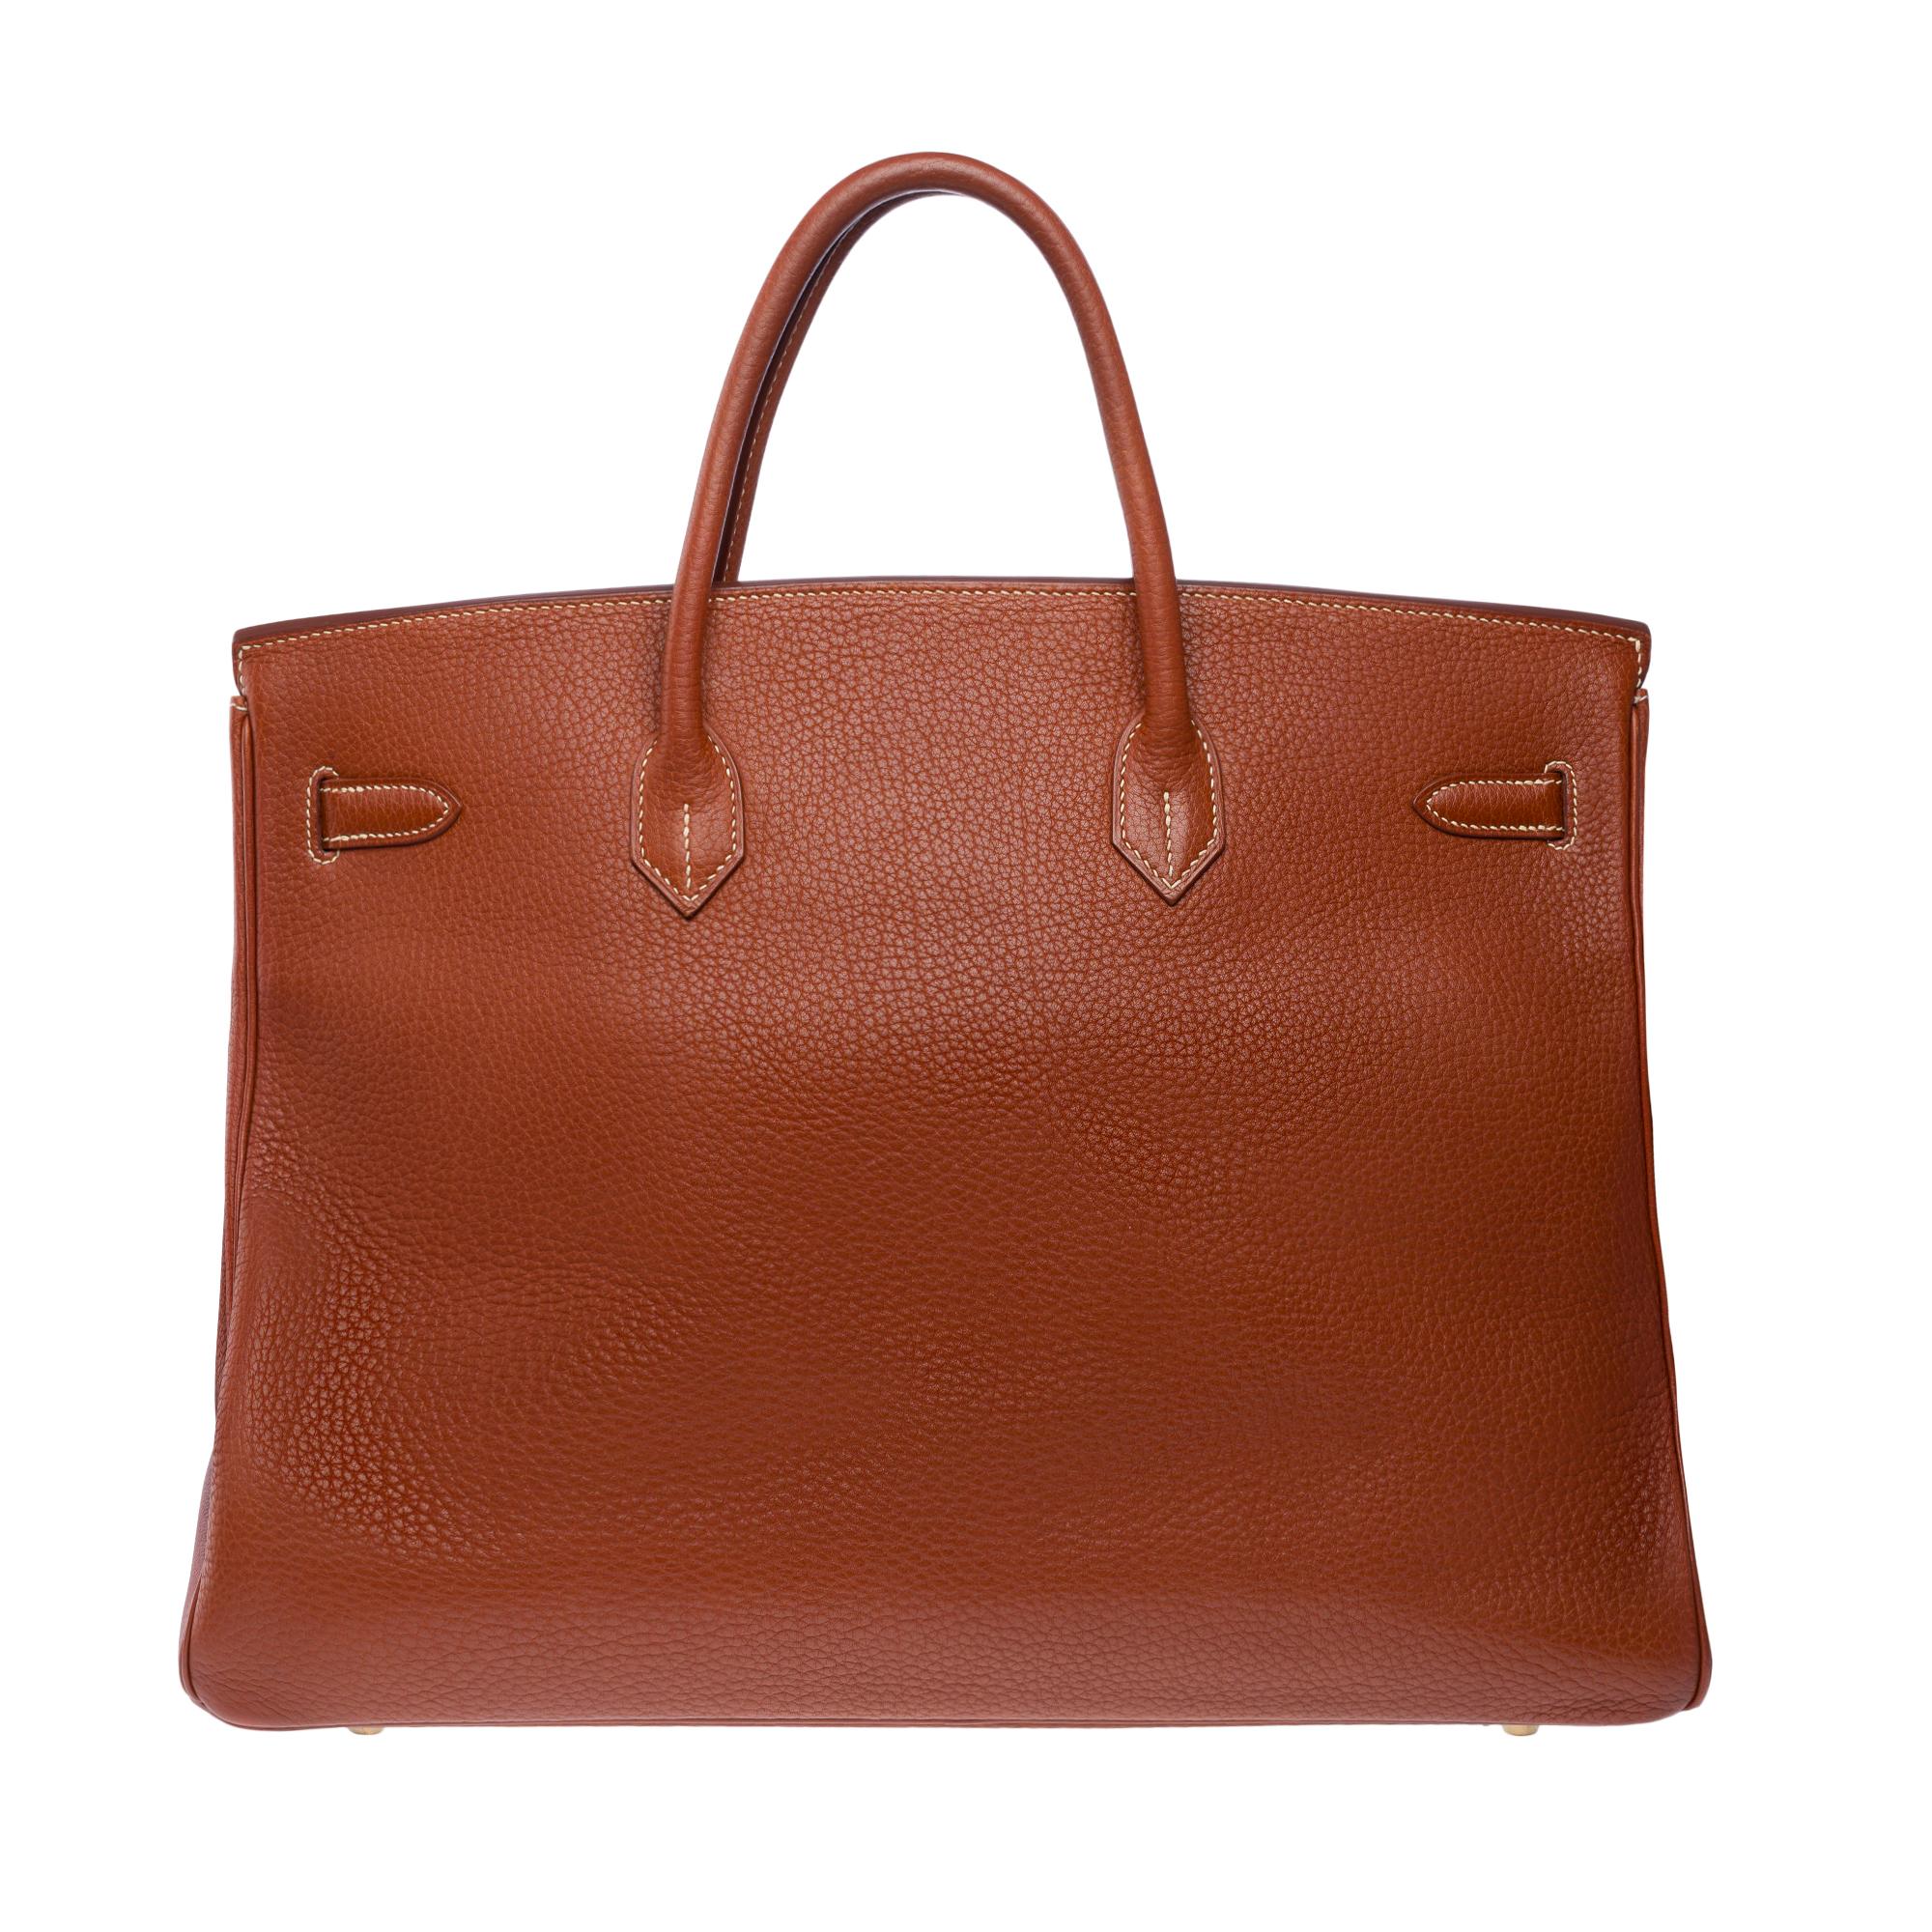 Women's or Men's Classy & Rare Hermes Birkin 40 handbag in Brick Fjord leather, GHW